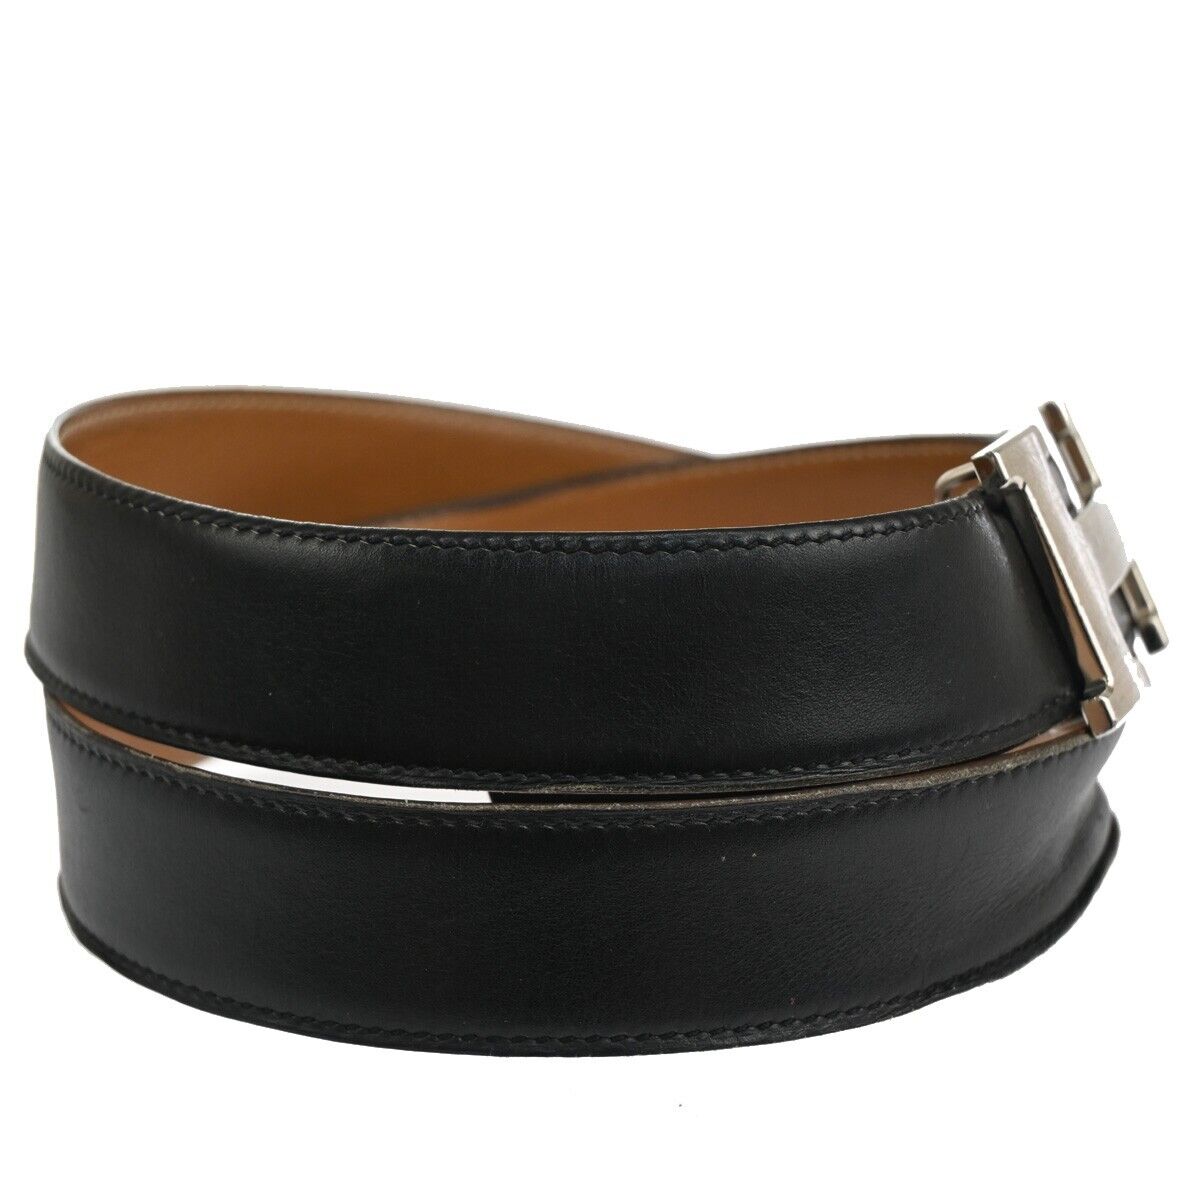 Versatile Reversible Leather Belt with Adjustable Buckle